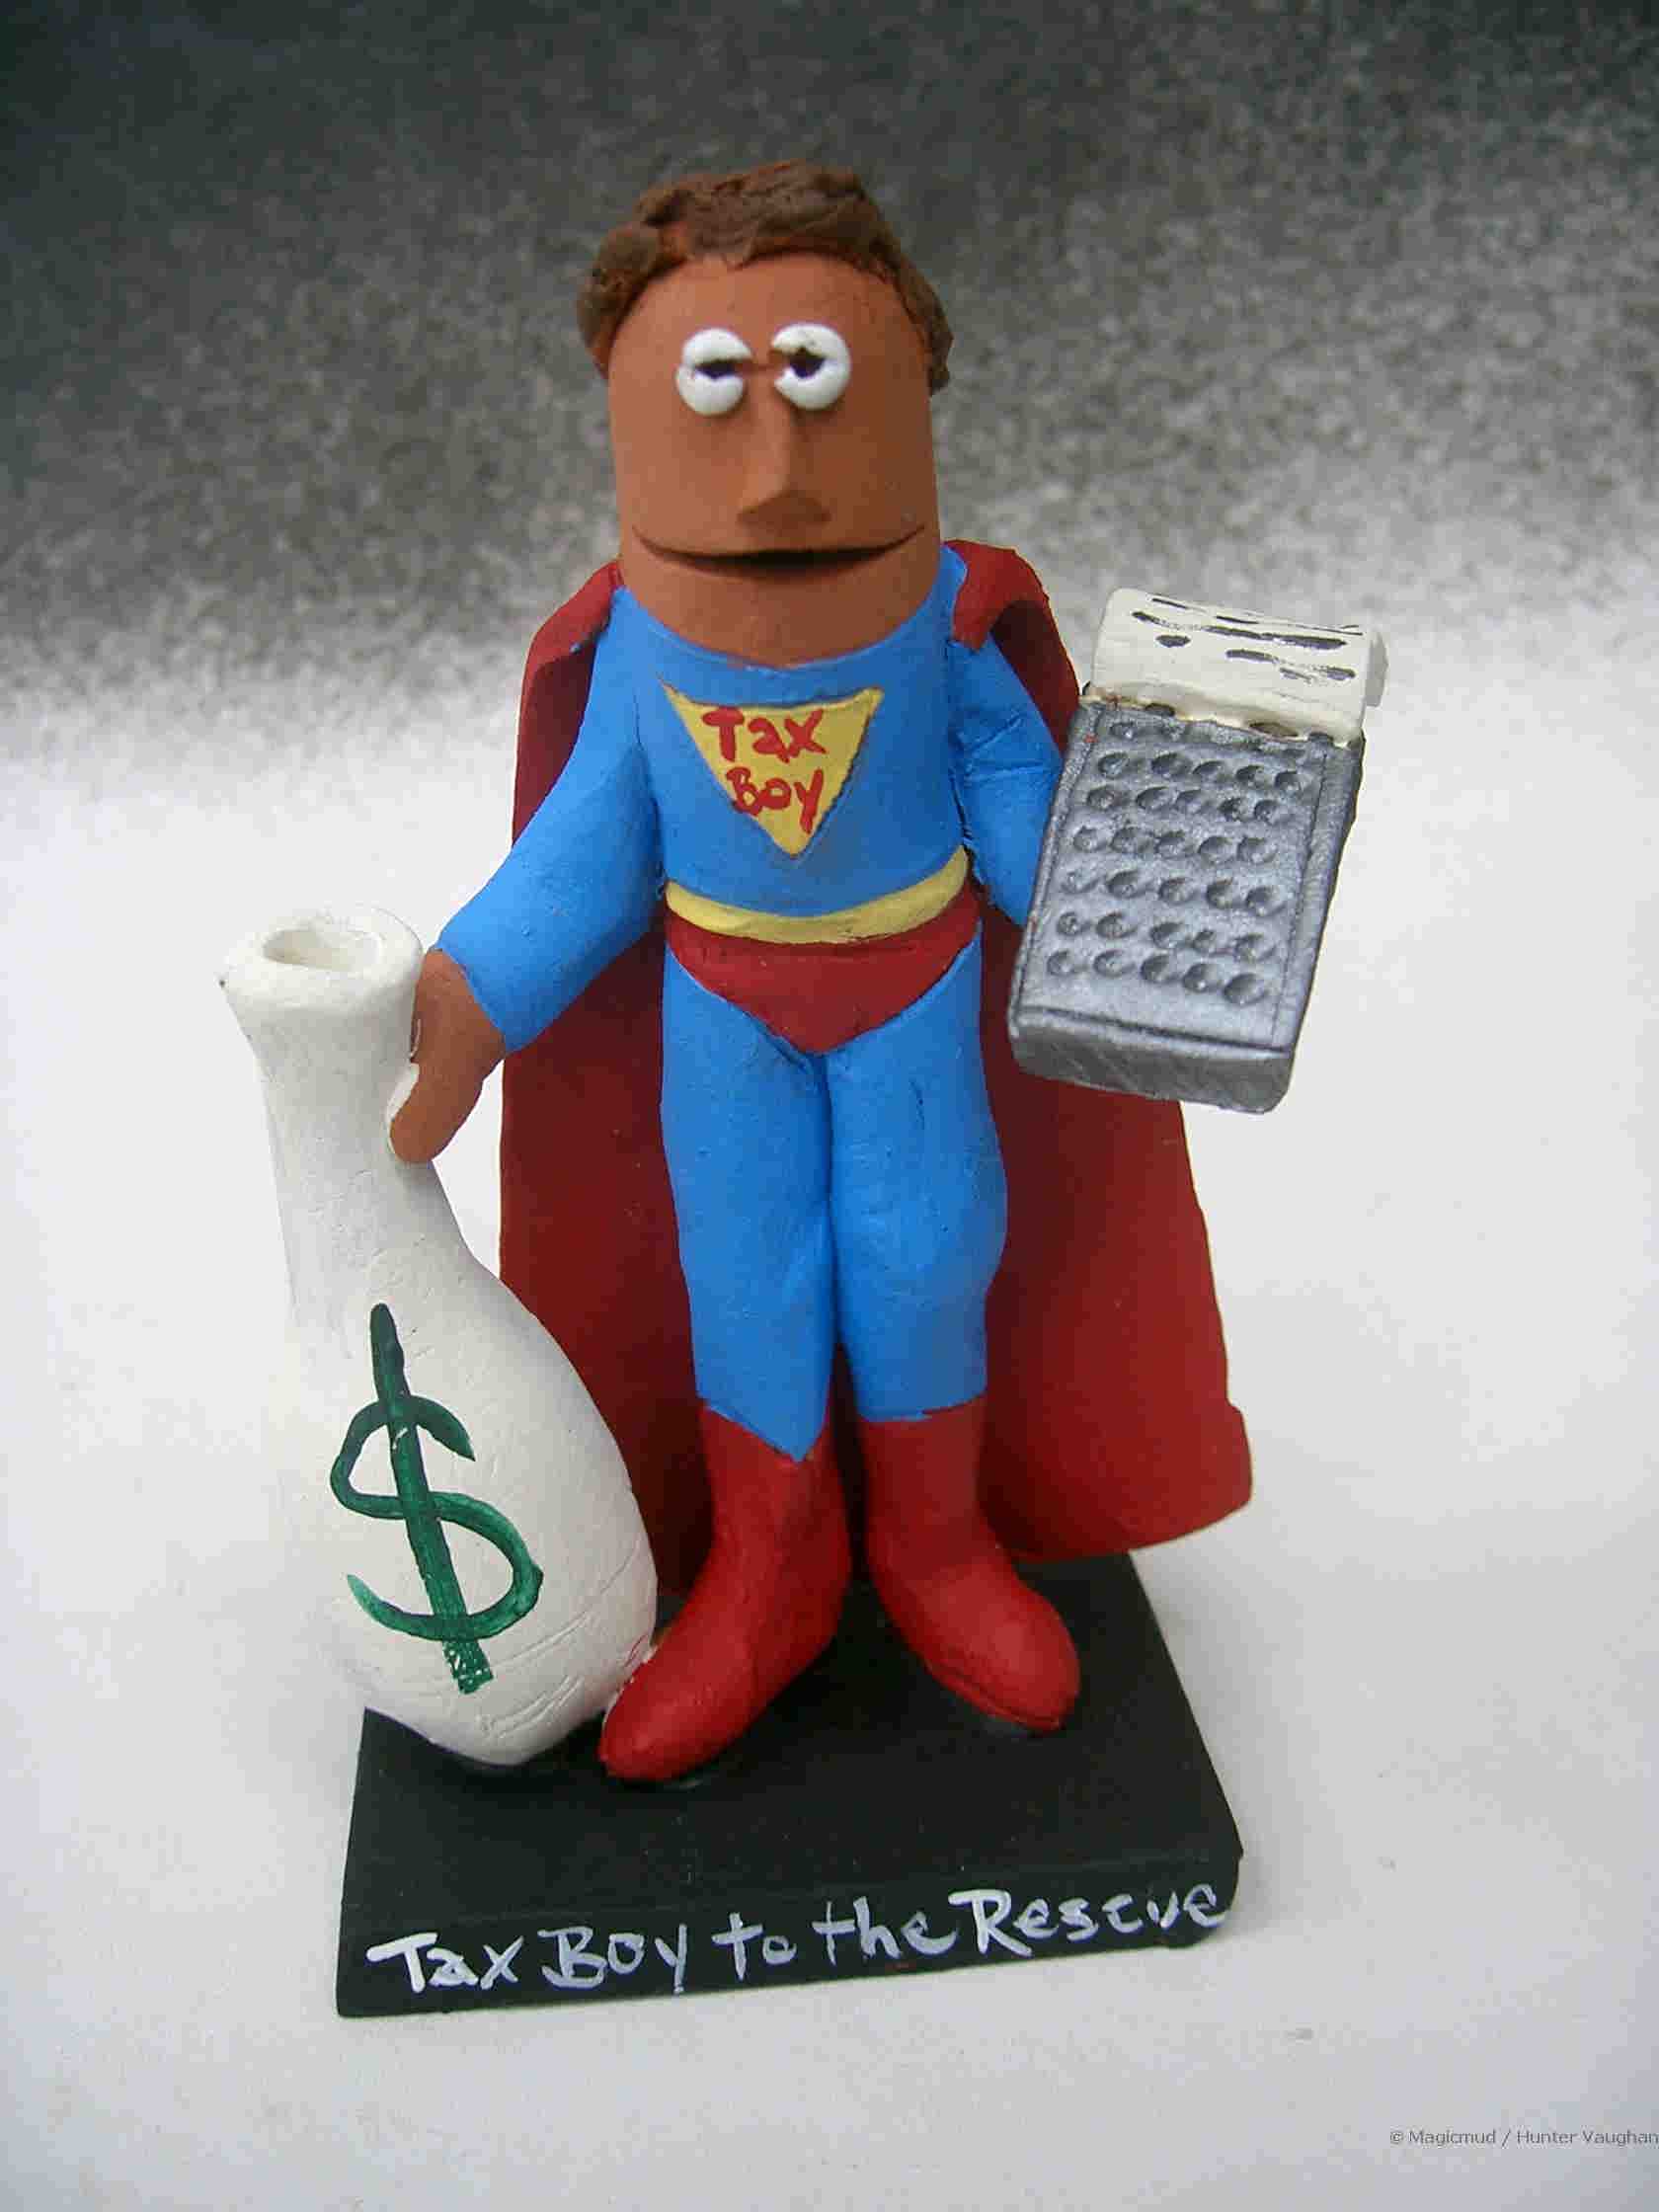 Funny Accountant's Figurine